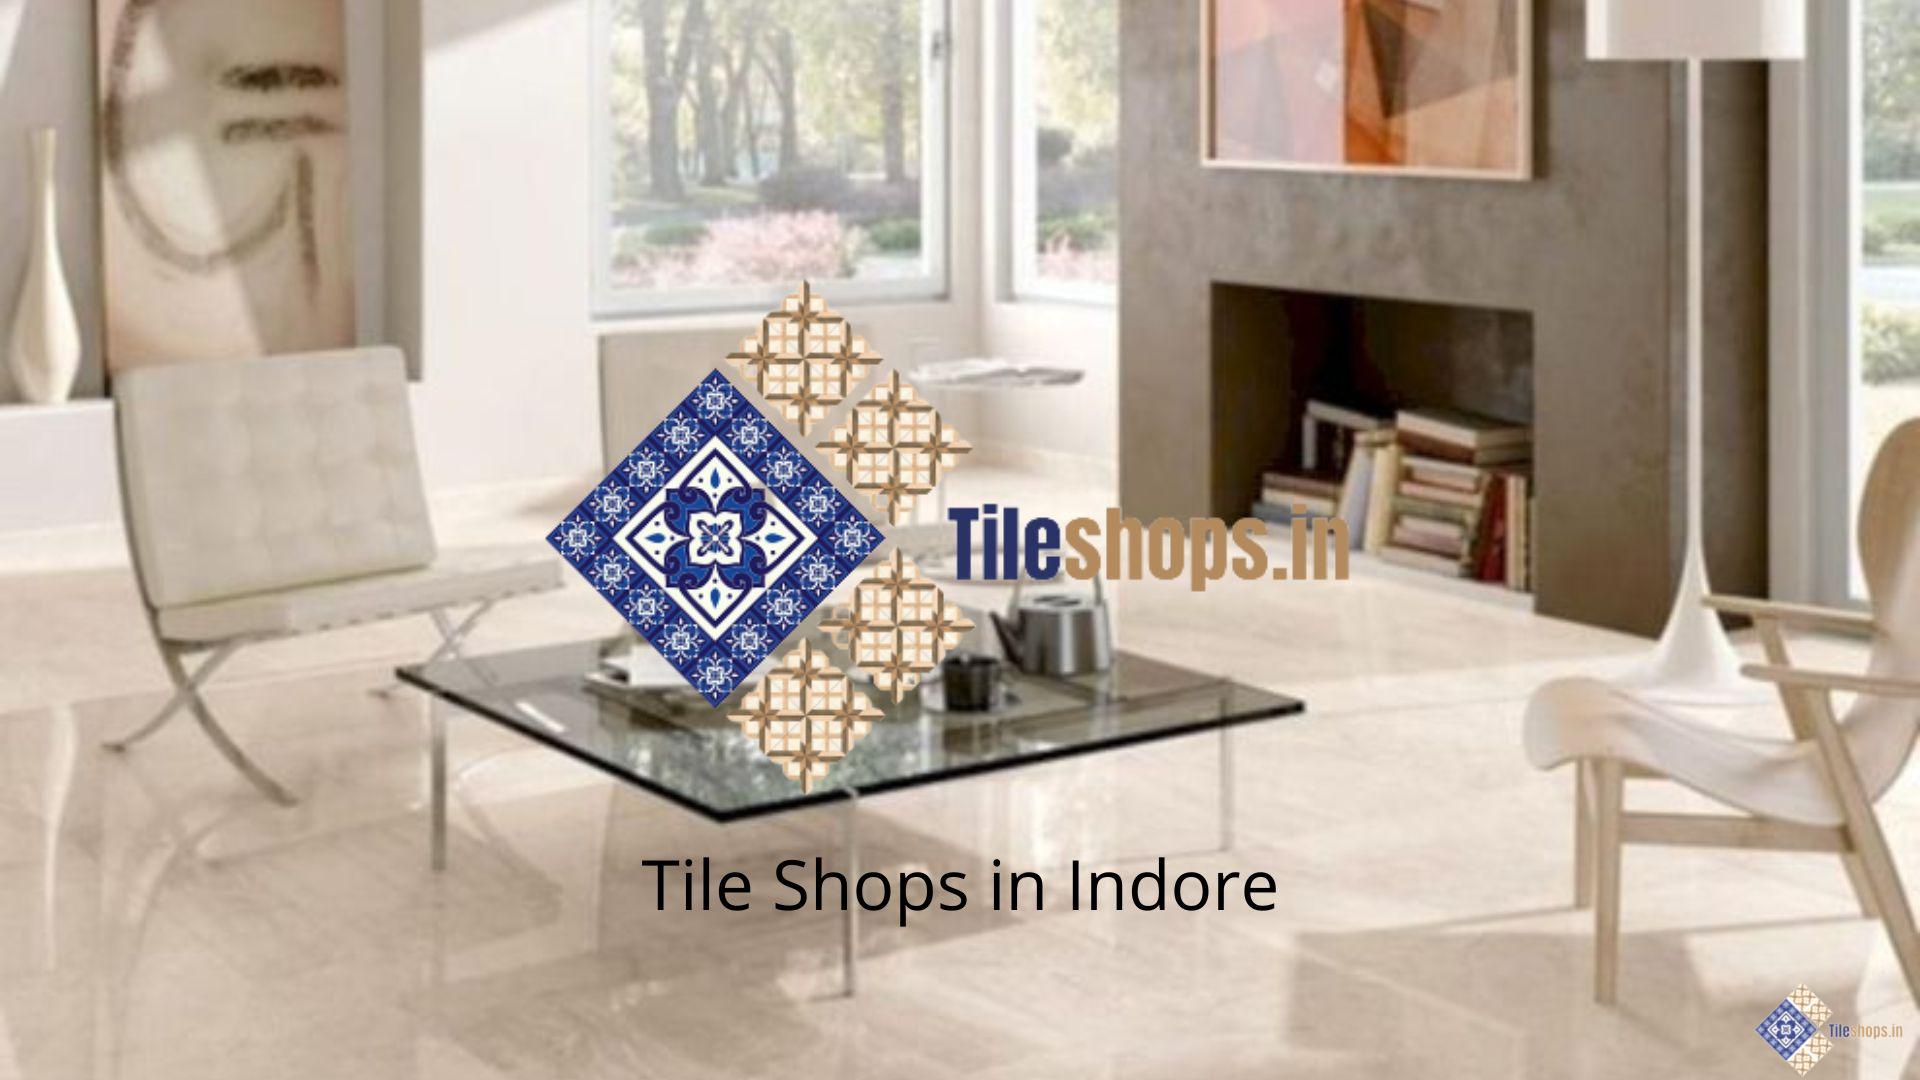 Tile Shops in Indore